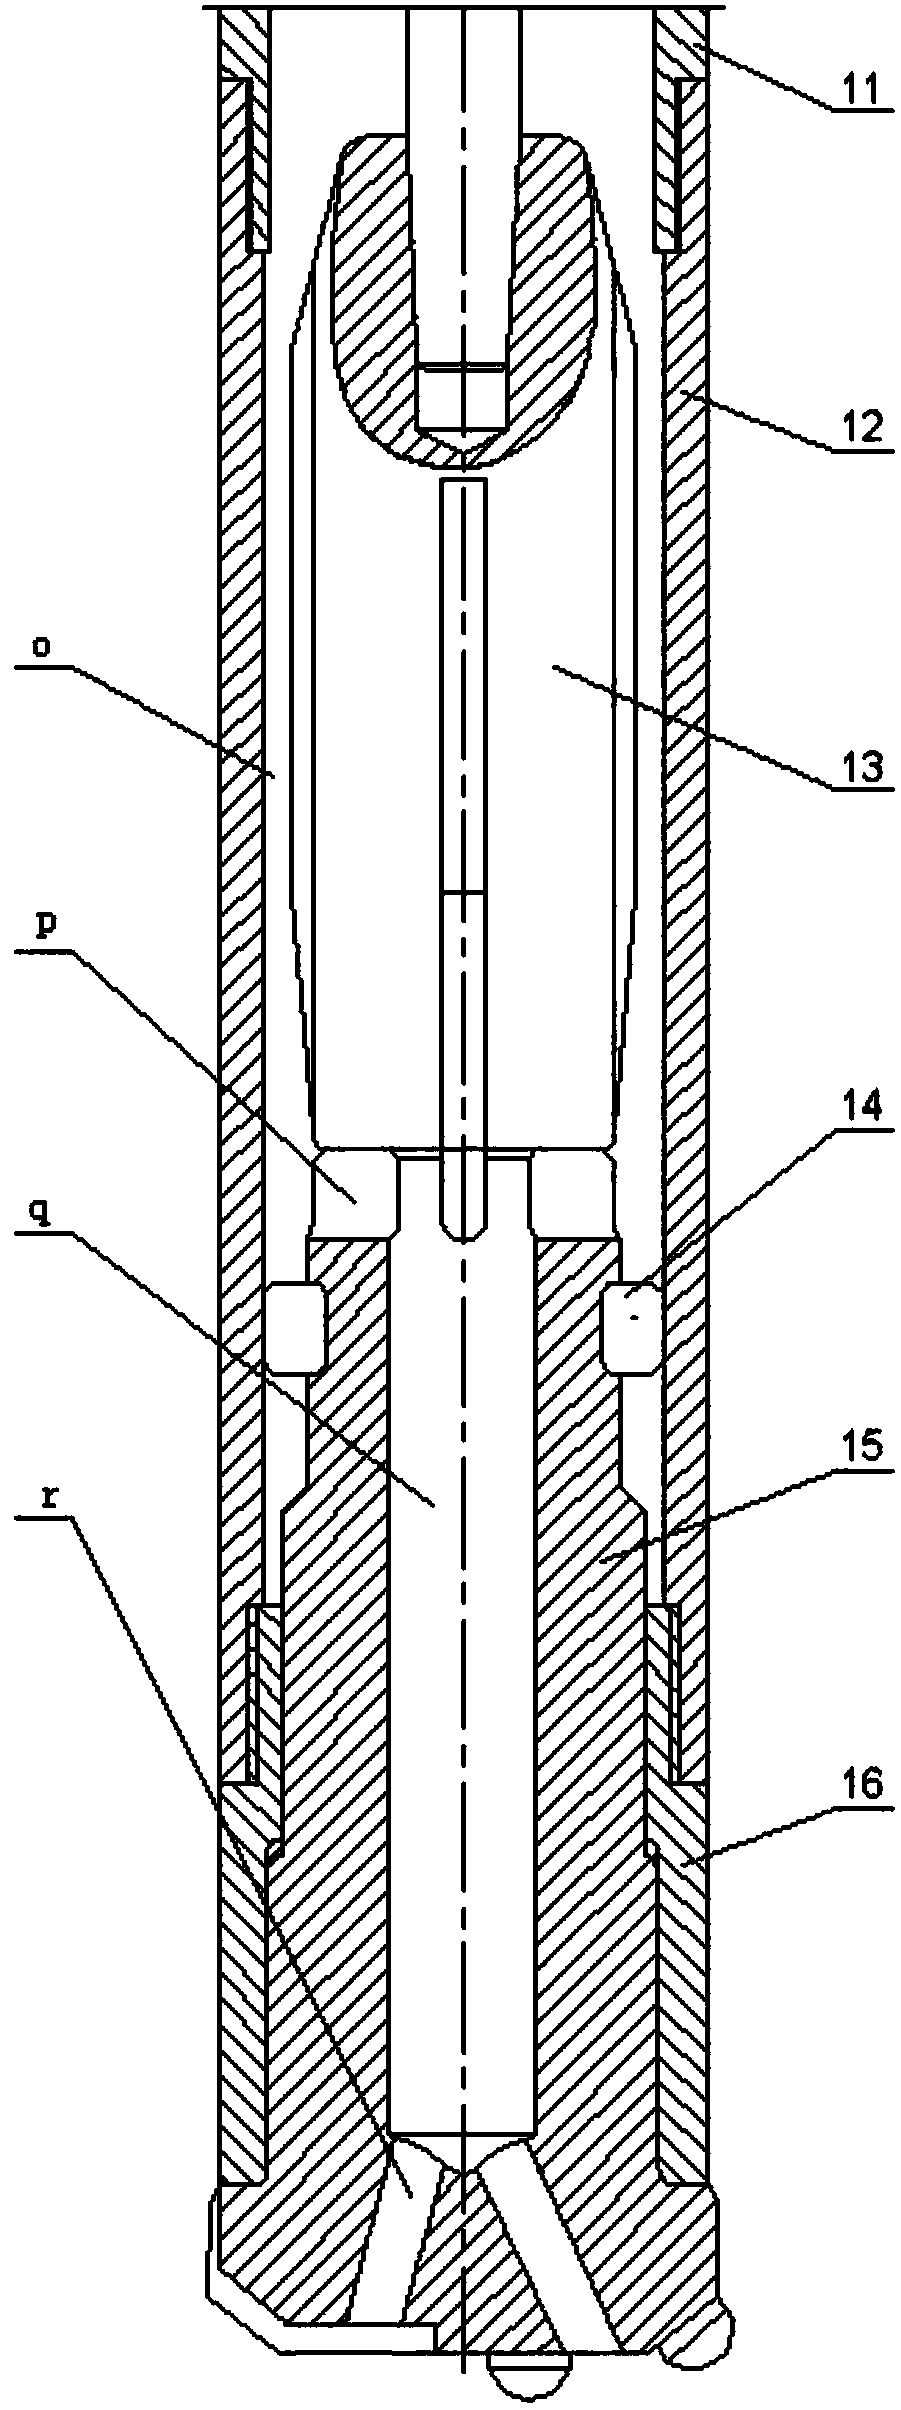 Rotating-valve-type hydrodynamic impactor